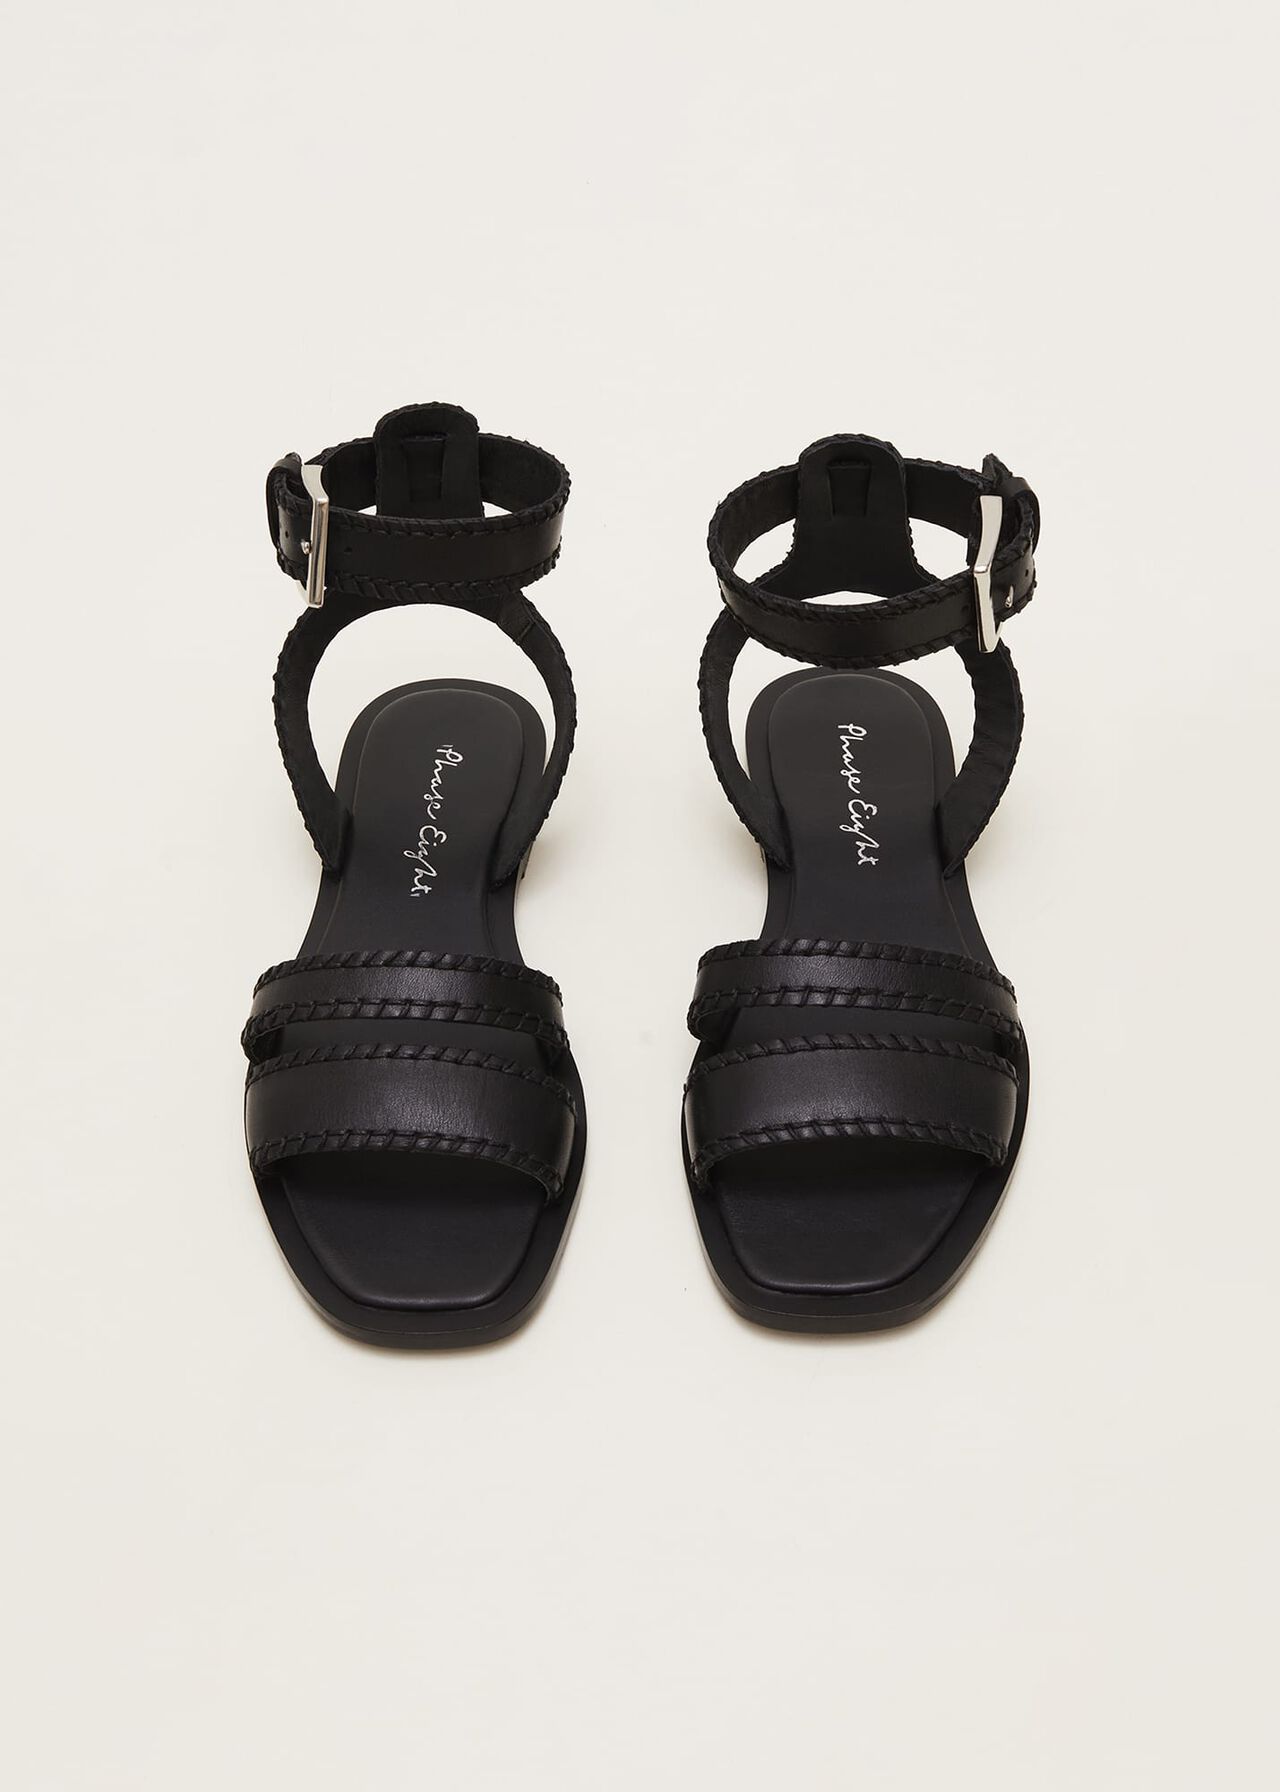 Black Leather Flat Sandals